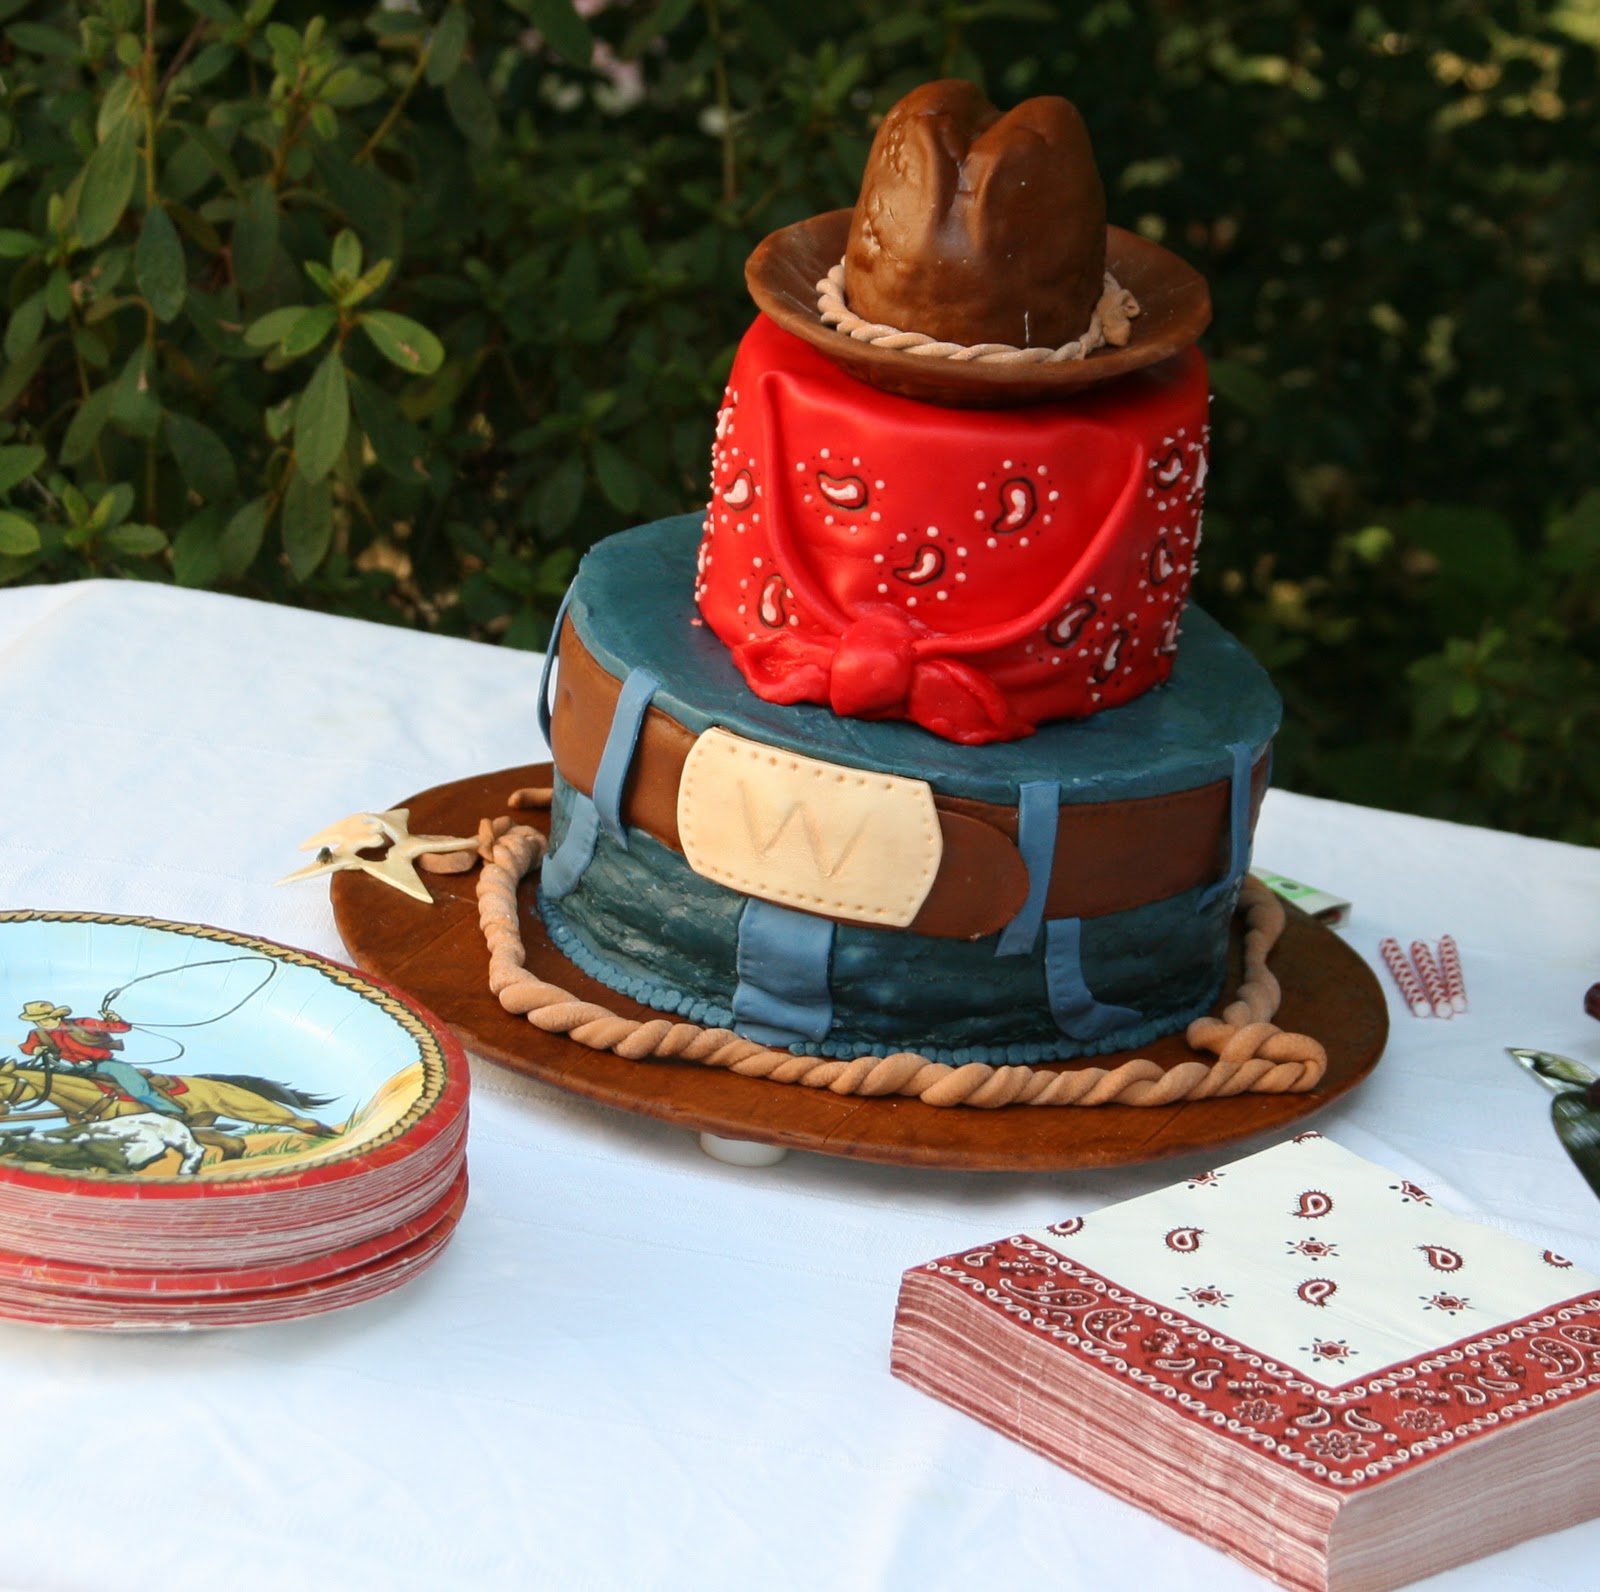 Cowboy Birthday Cake